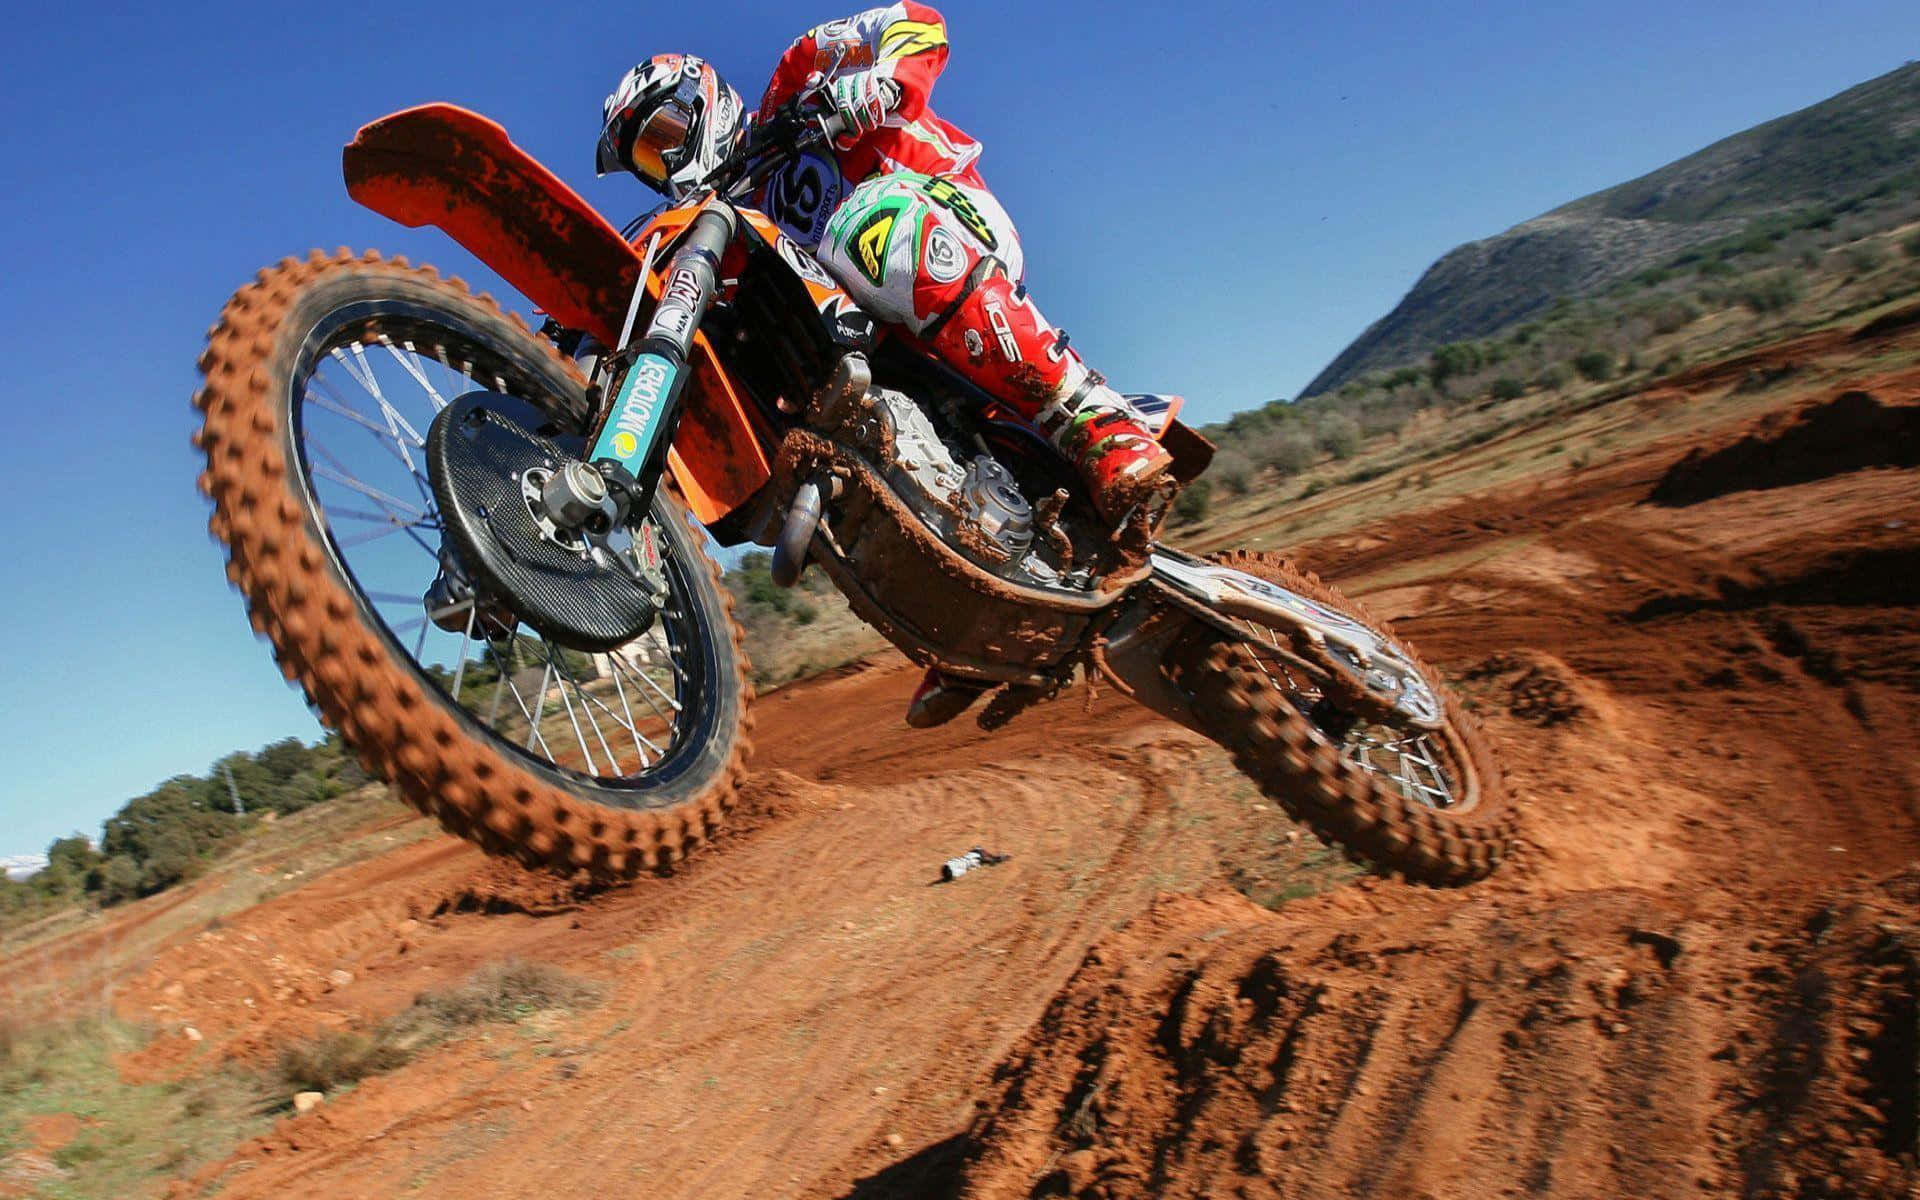 Motocross Rider Catching Air on a Dirt Bike